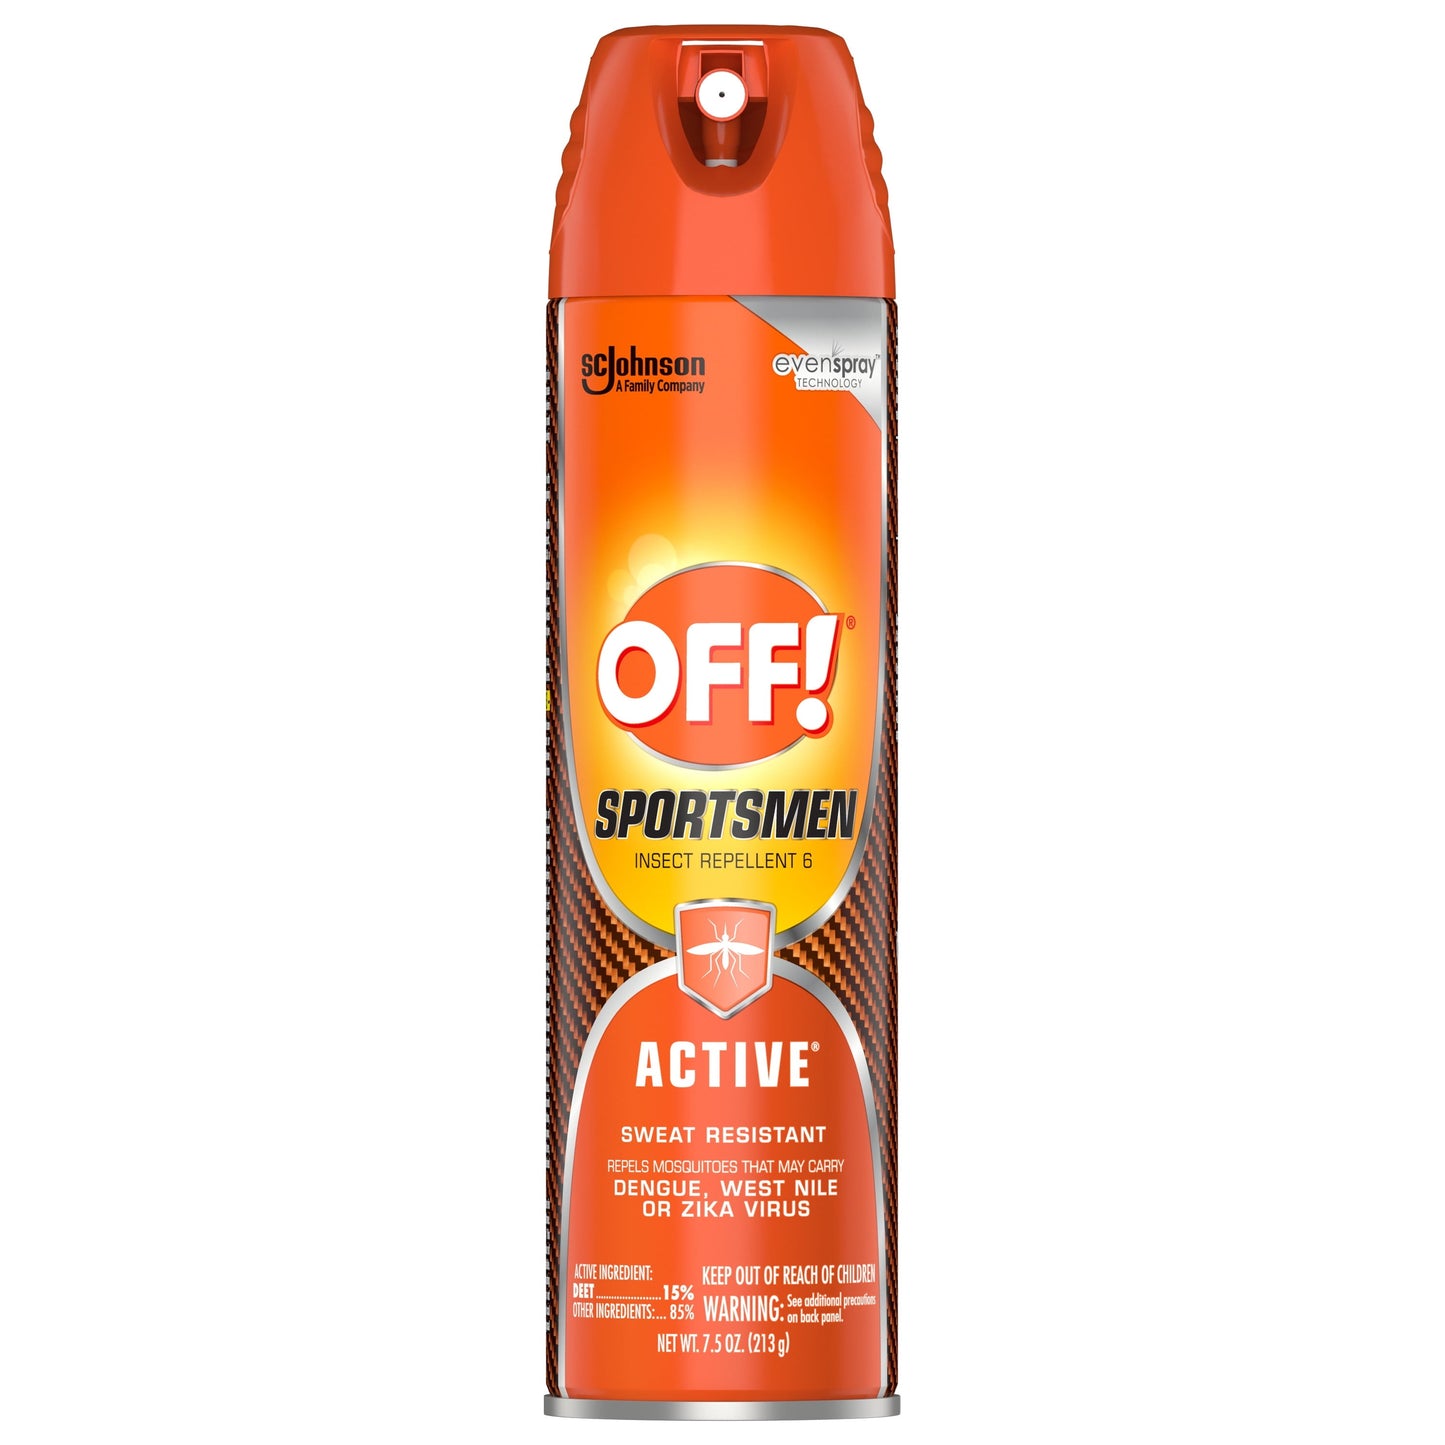 OFF! Sportsmen Active Insect Repellent VI, 7.5 fl oz